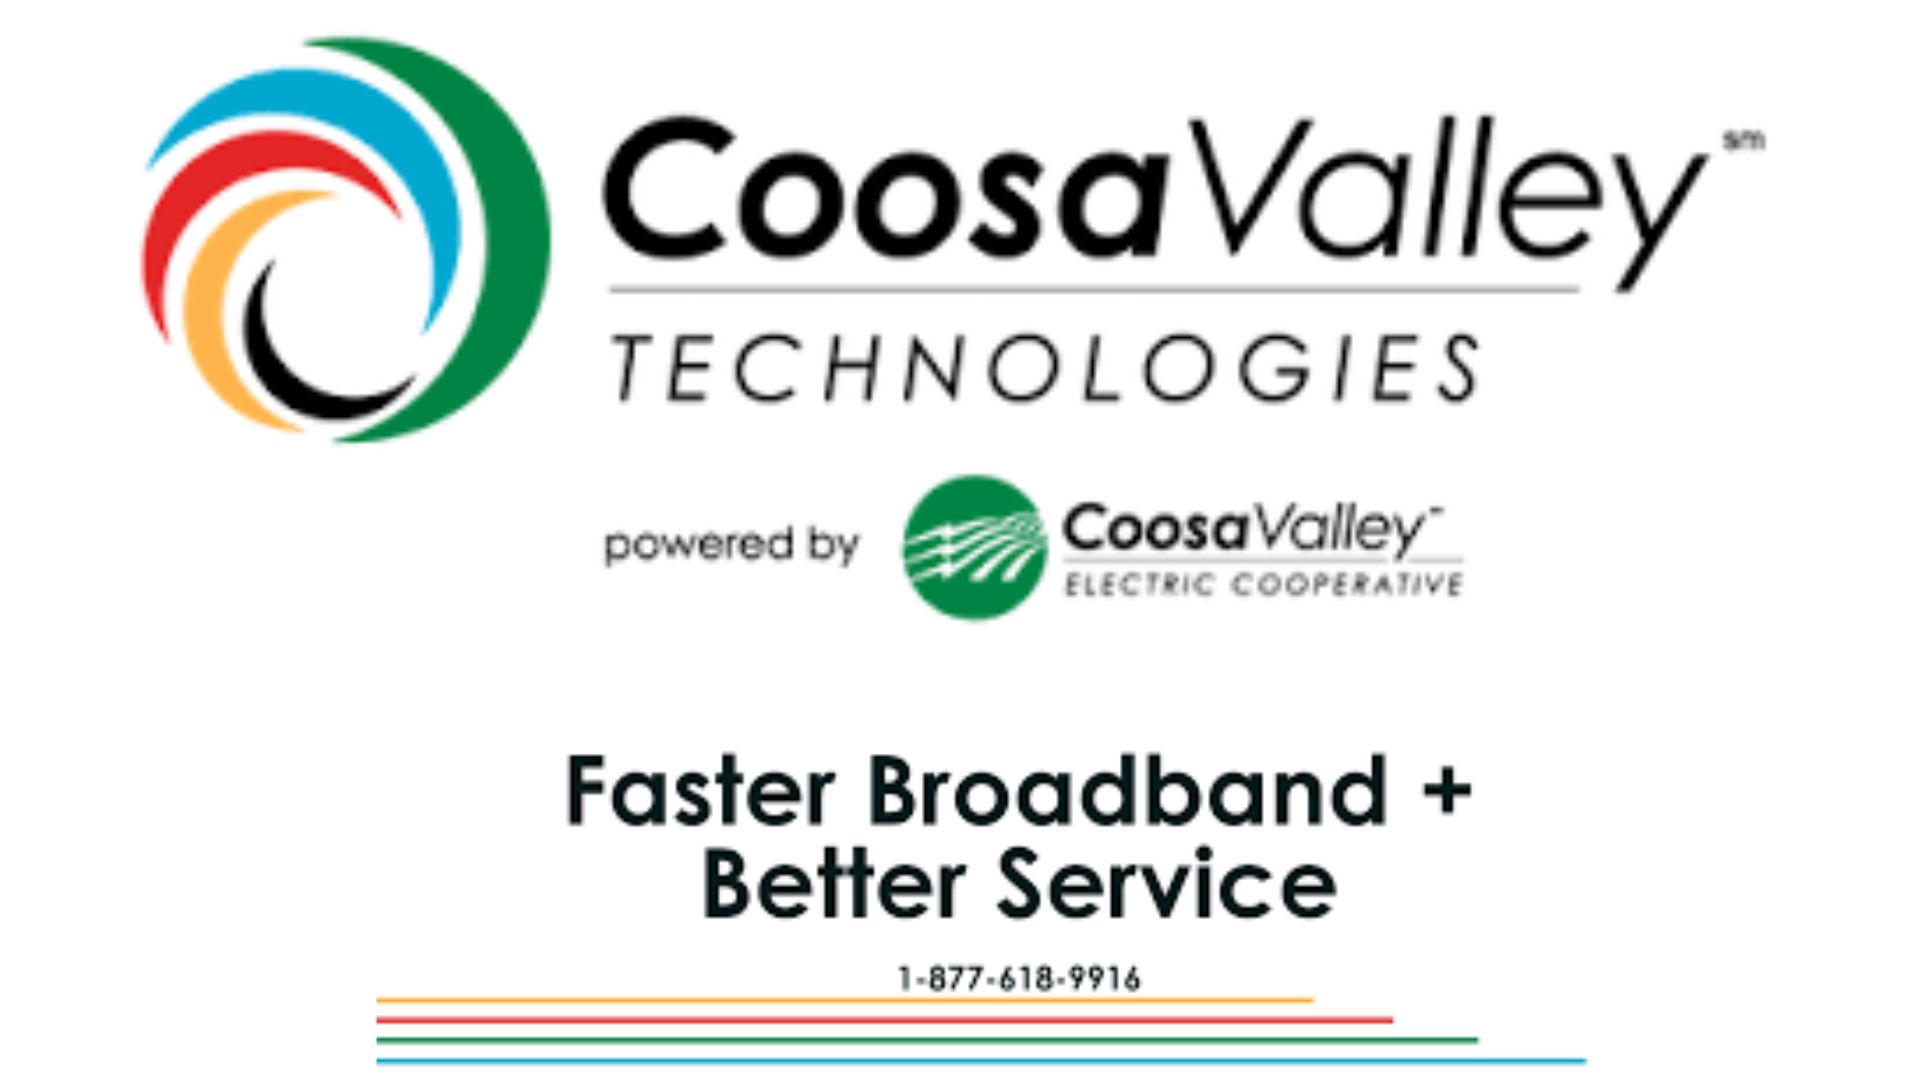 coosa valley technologies